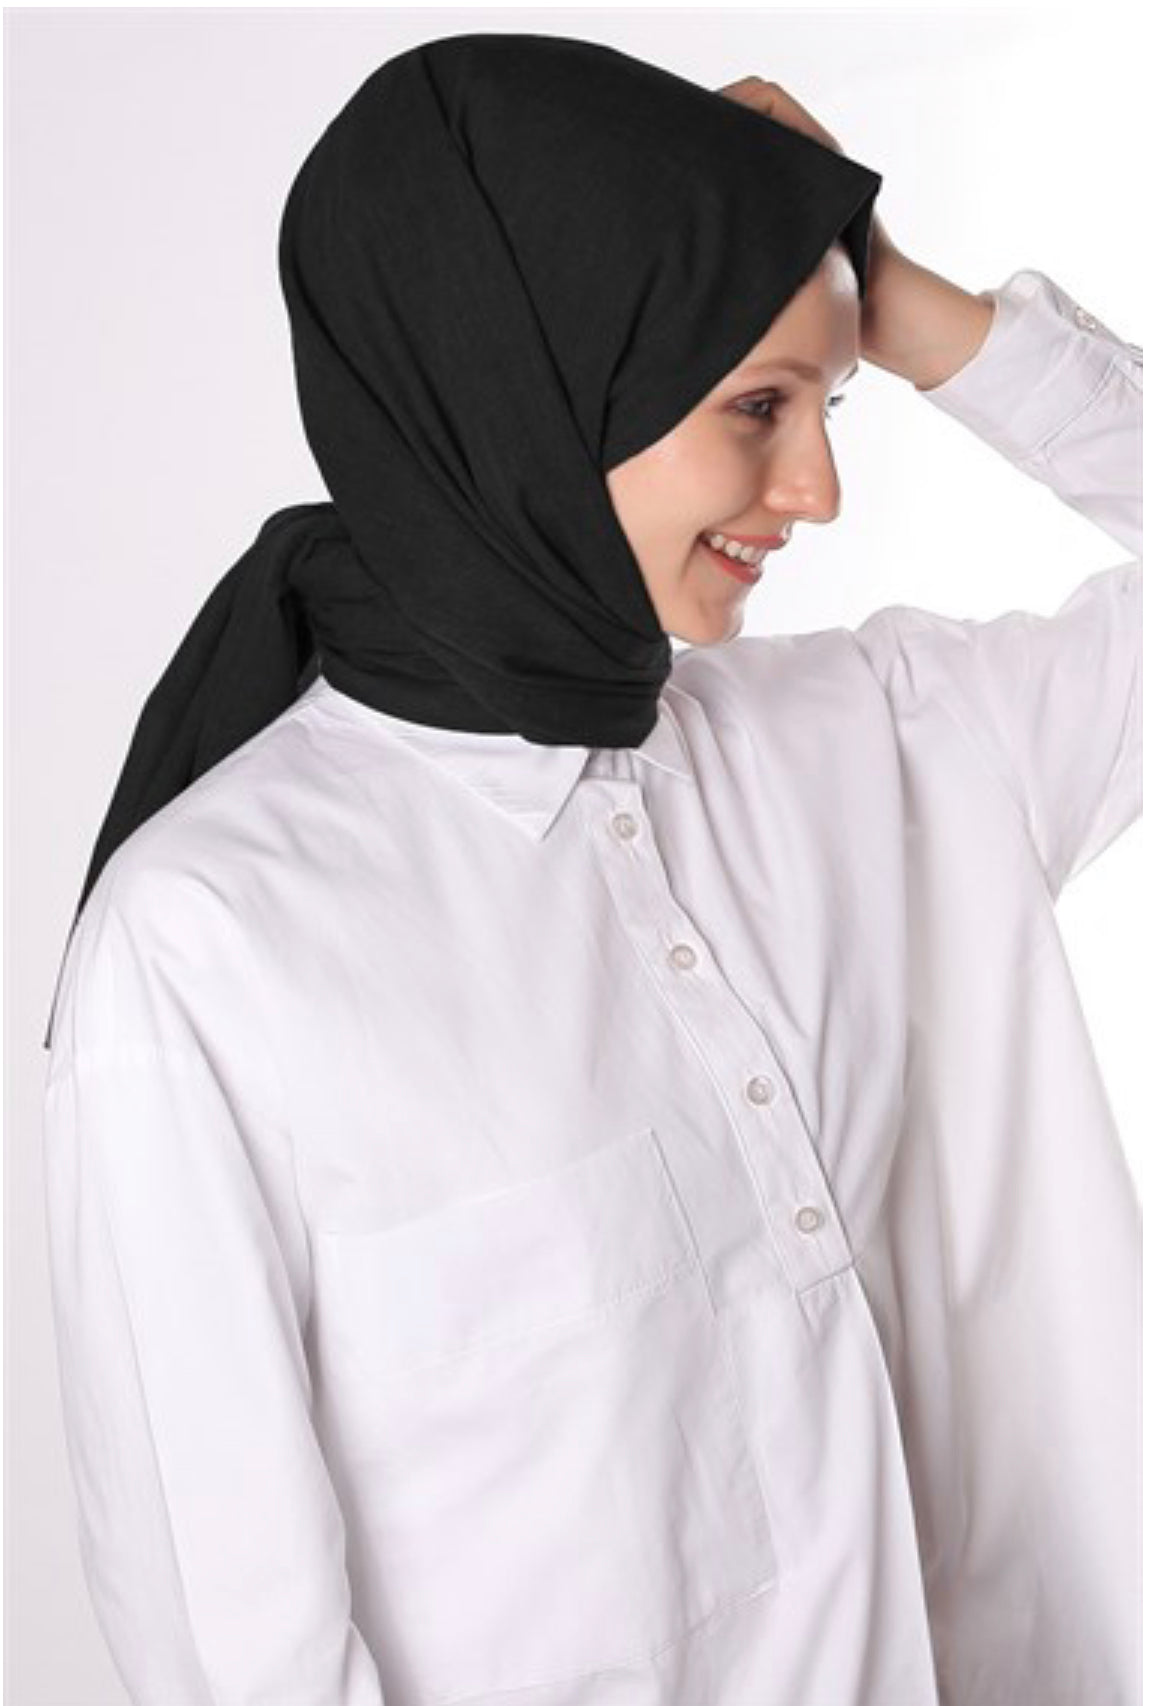 Neutral Cotton Hijab - Black